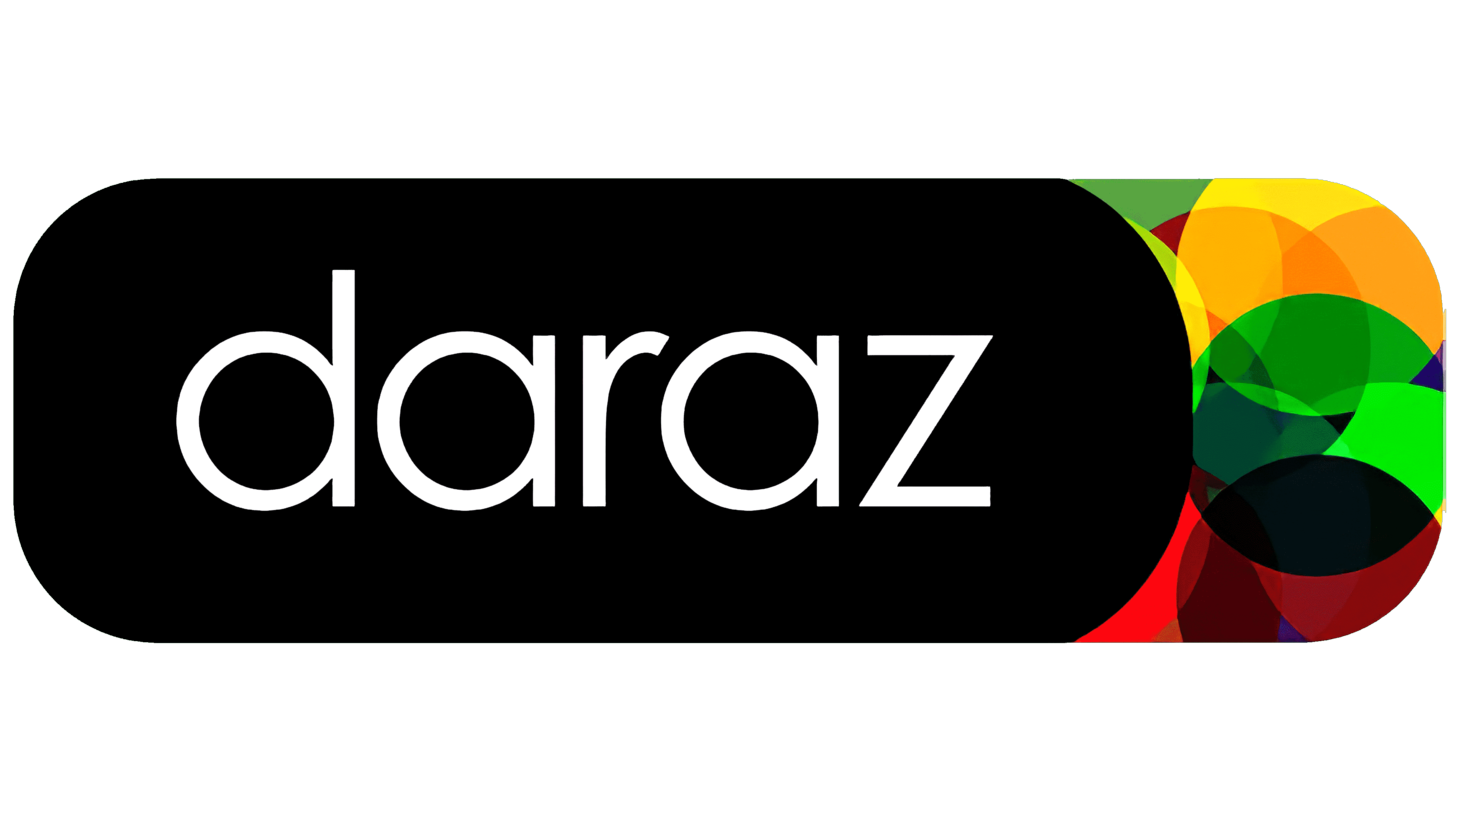 Daraz sign 2012